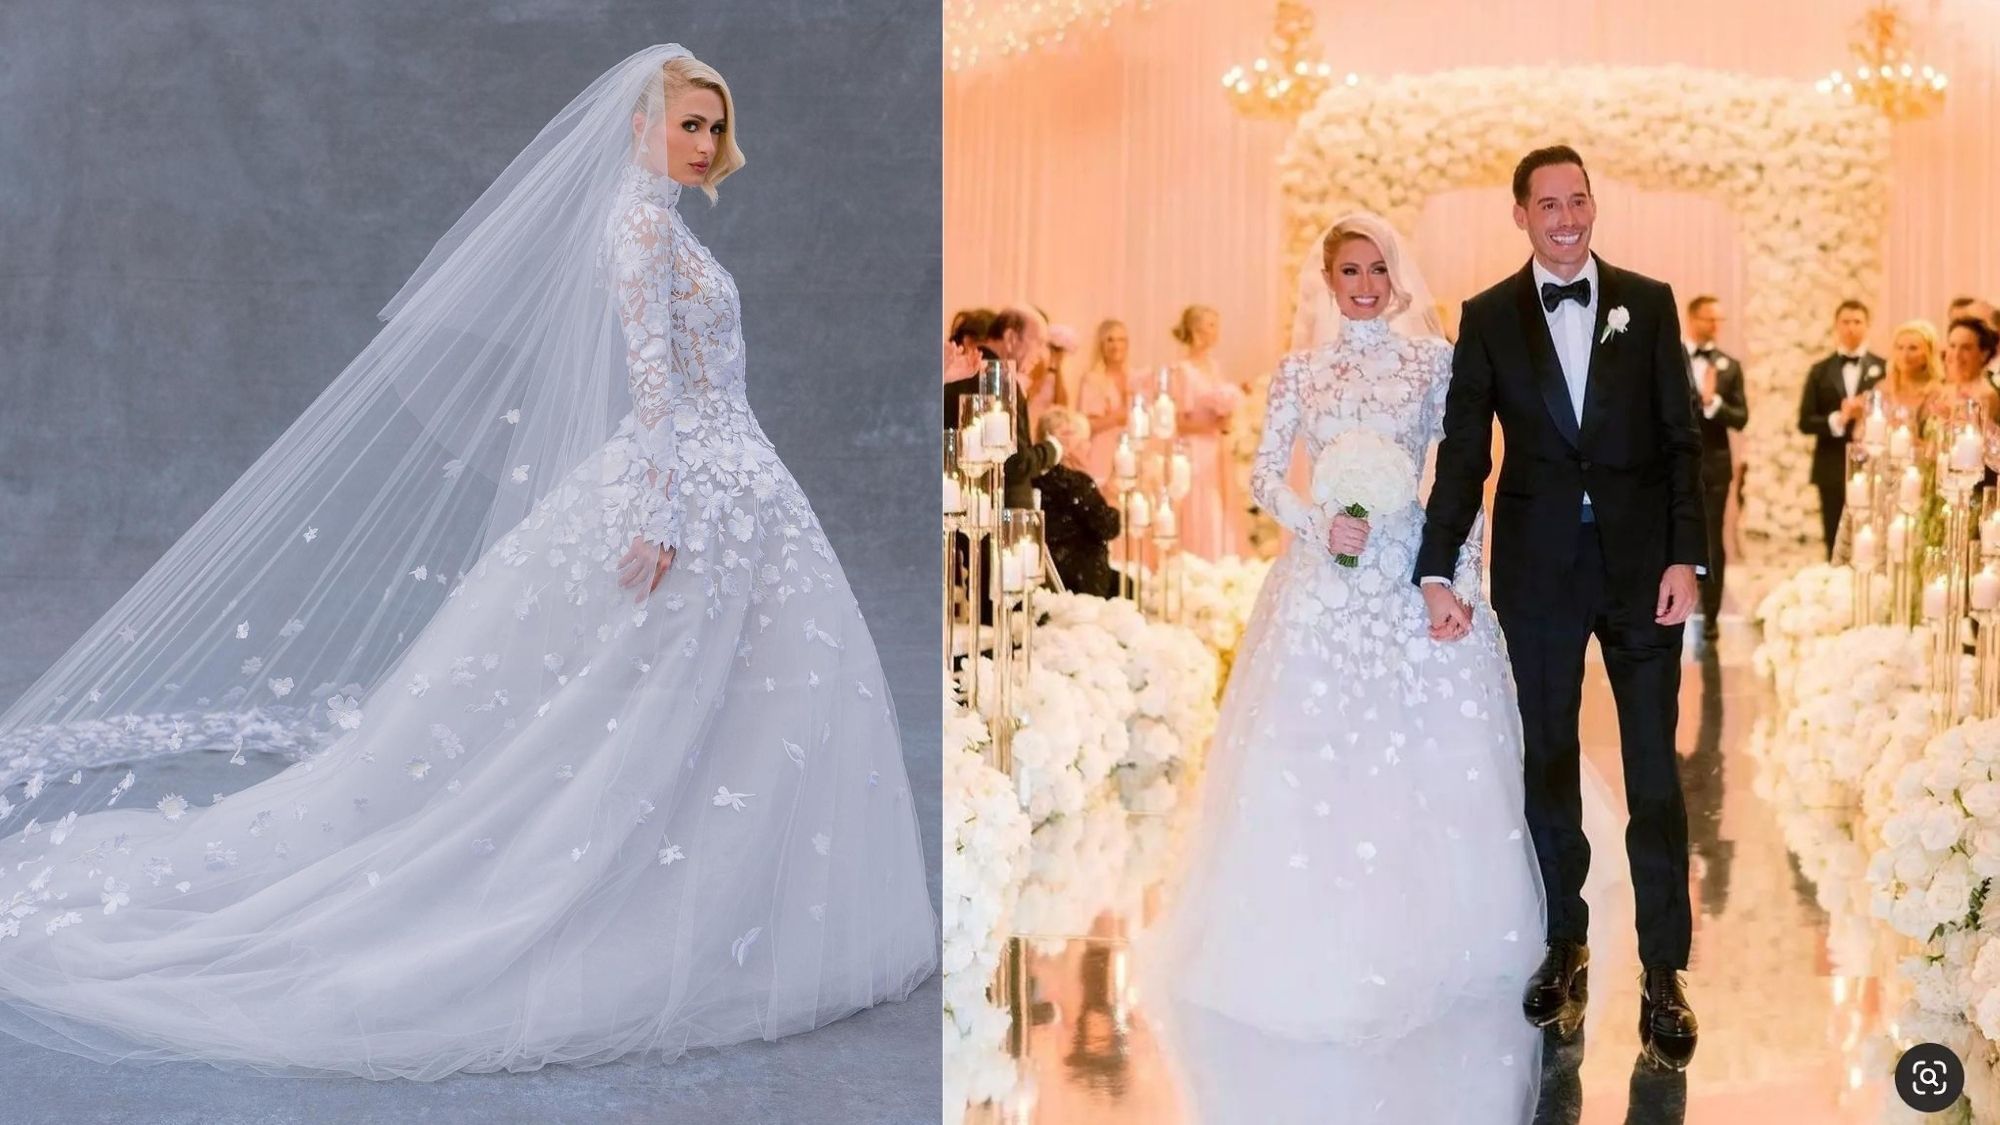 Paris Hilton, Carter Reum hold fairytale style wedding photo @parishilton